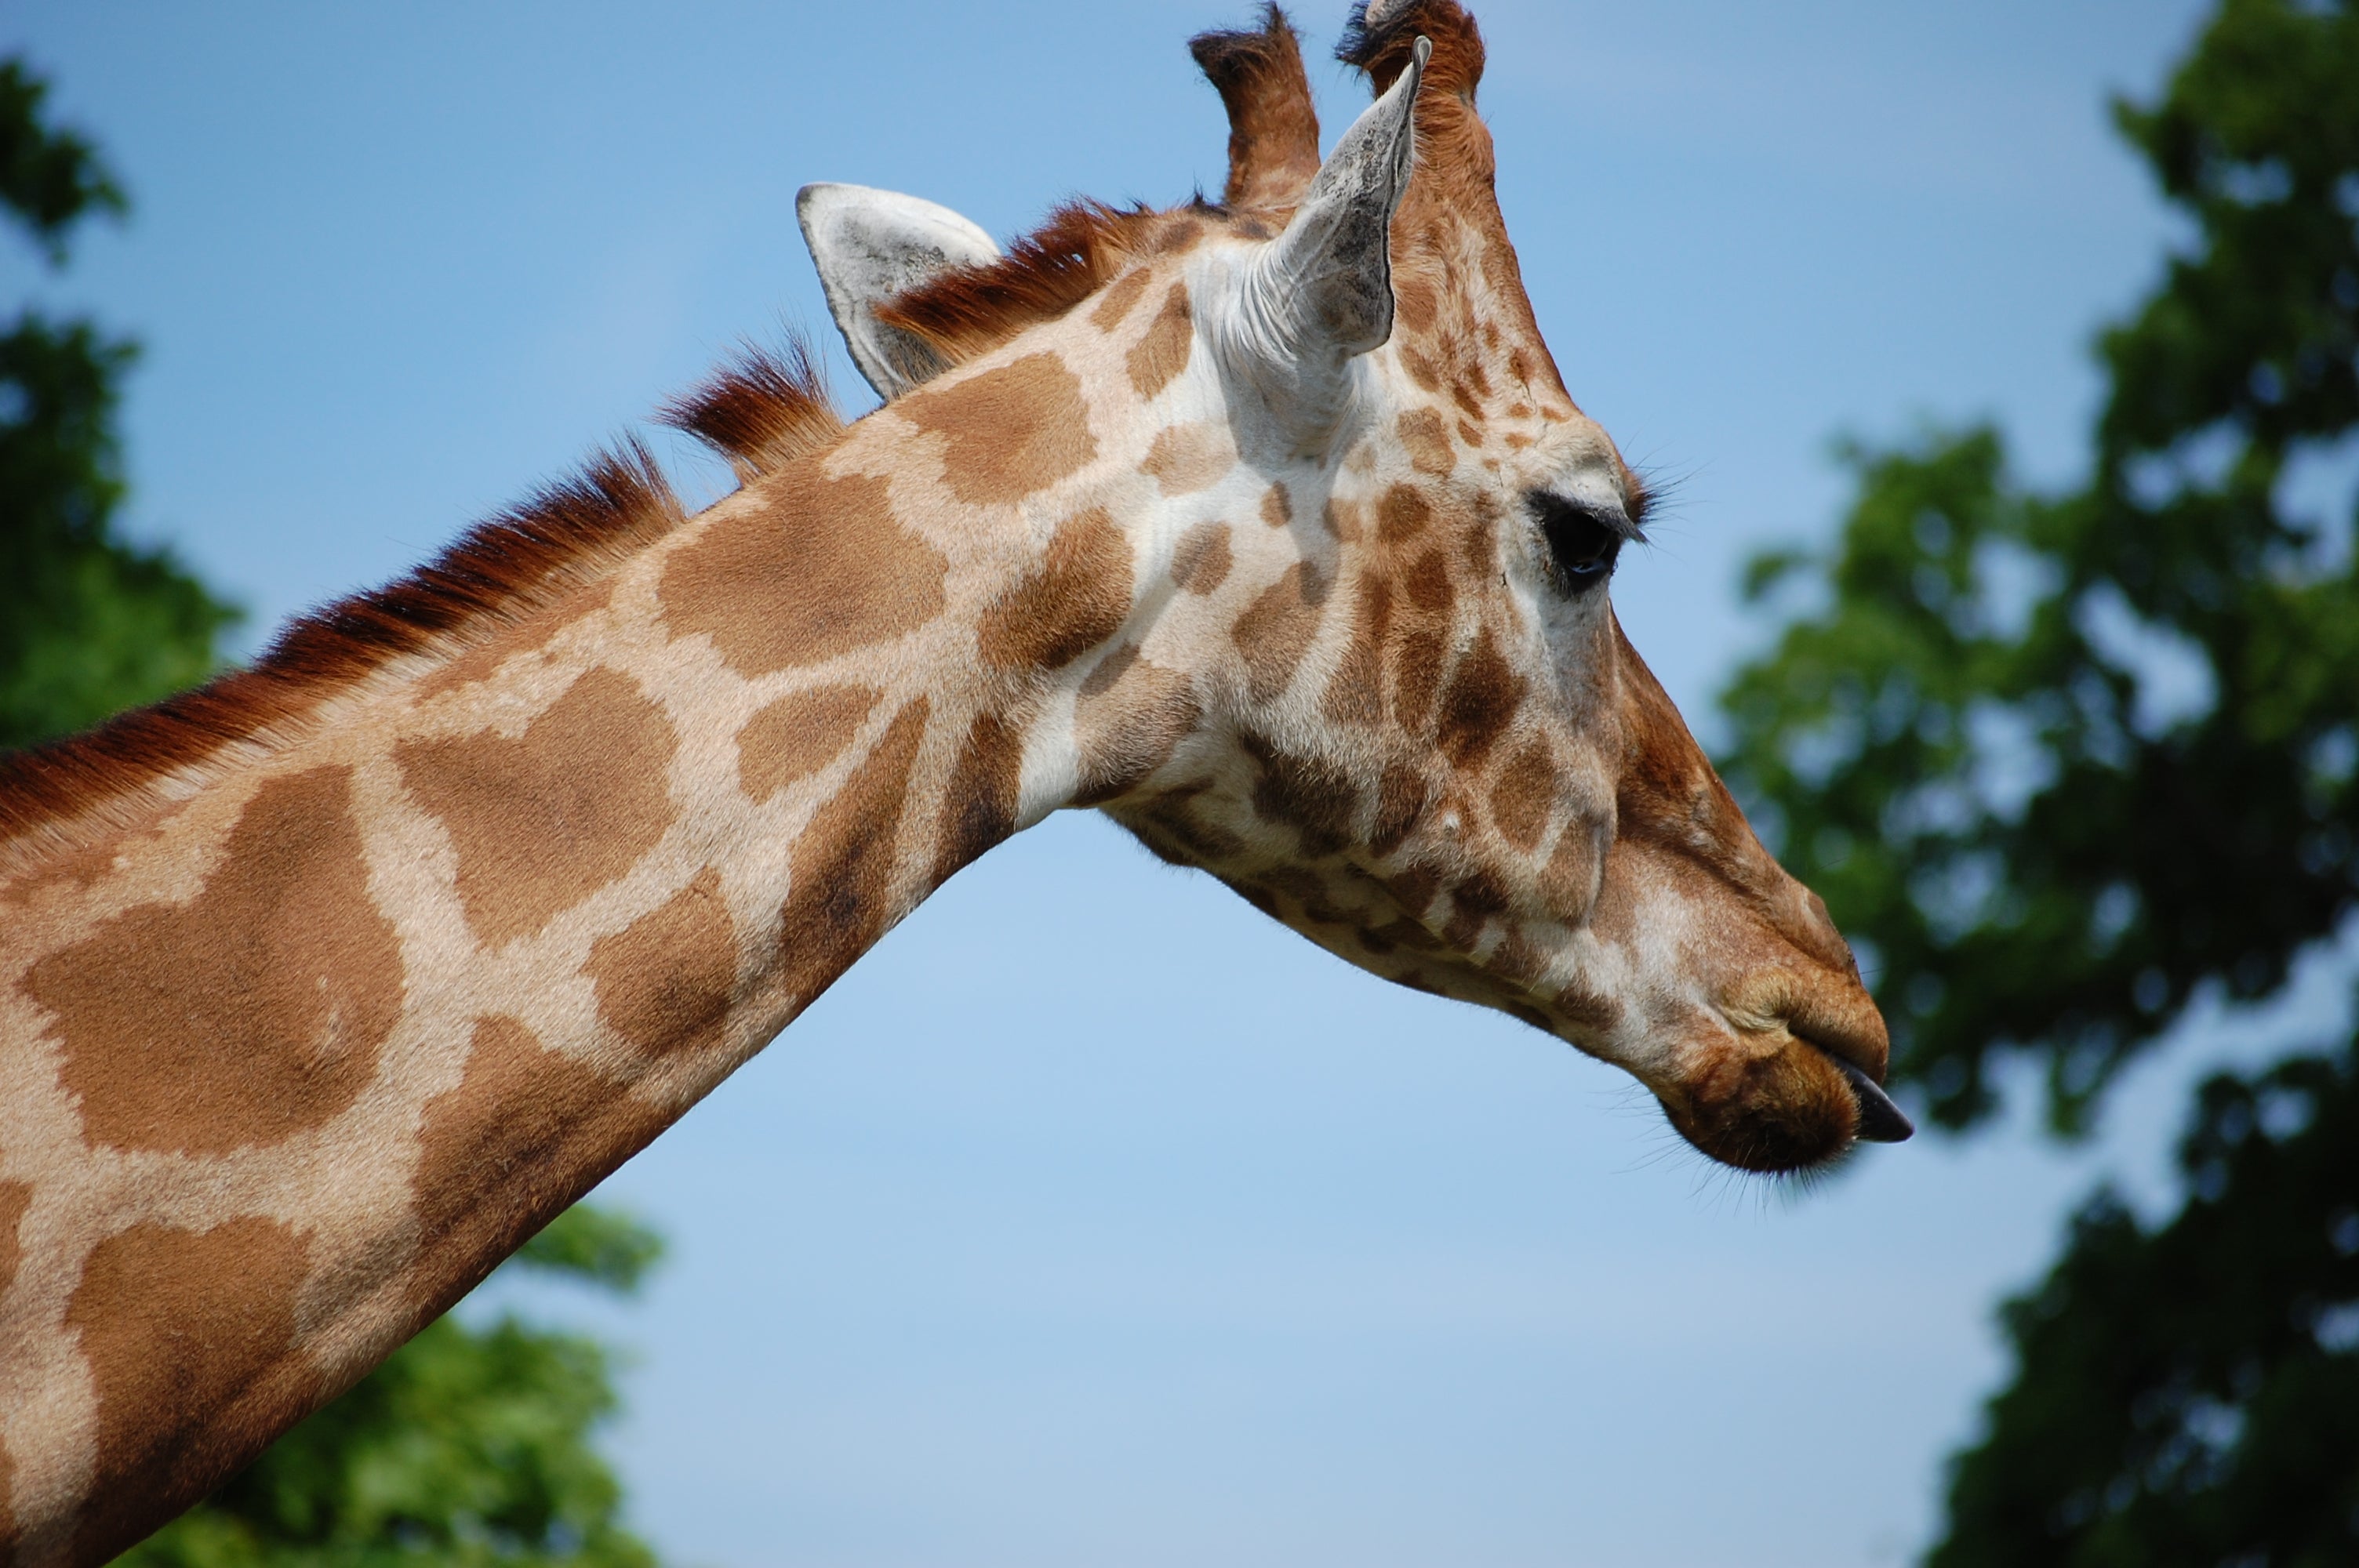 Genome Reveals Why Giraffes Have Long Necks - Scientific American